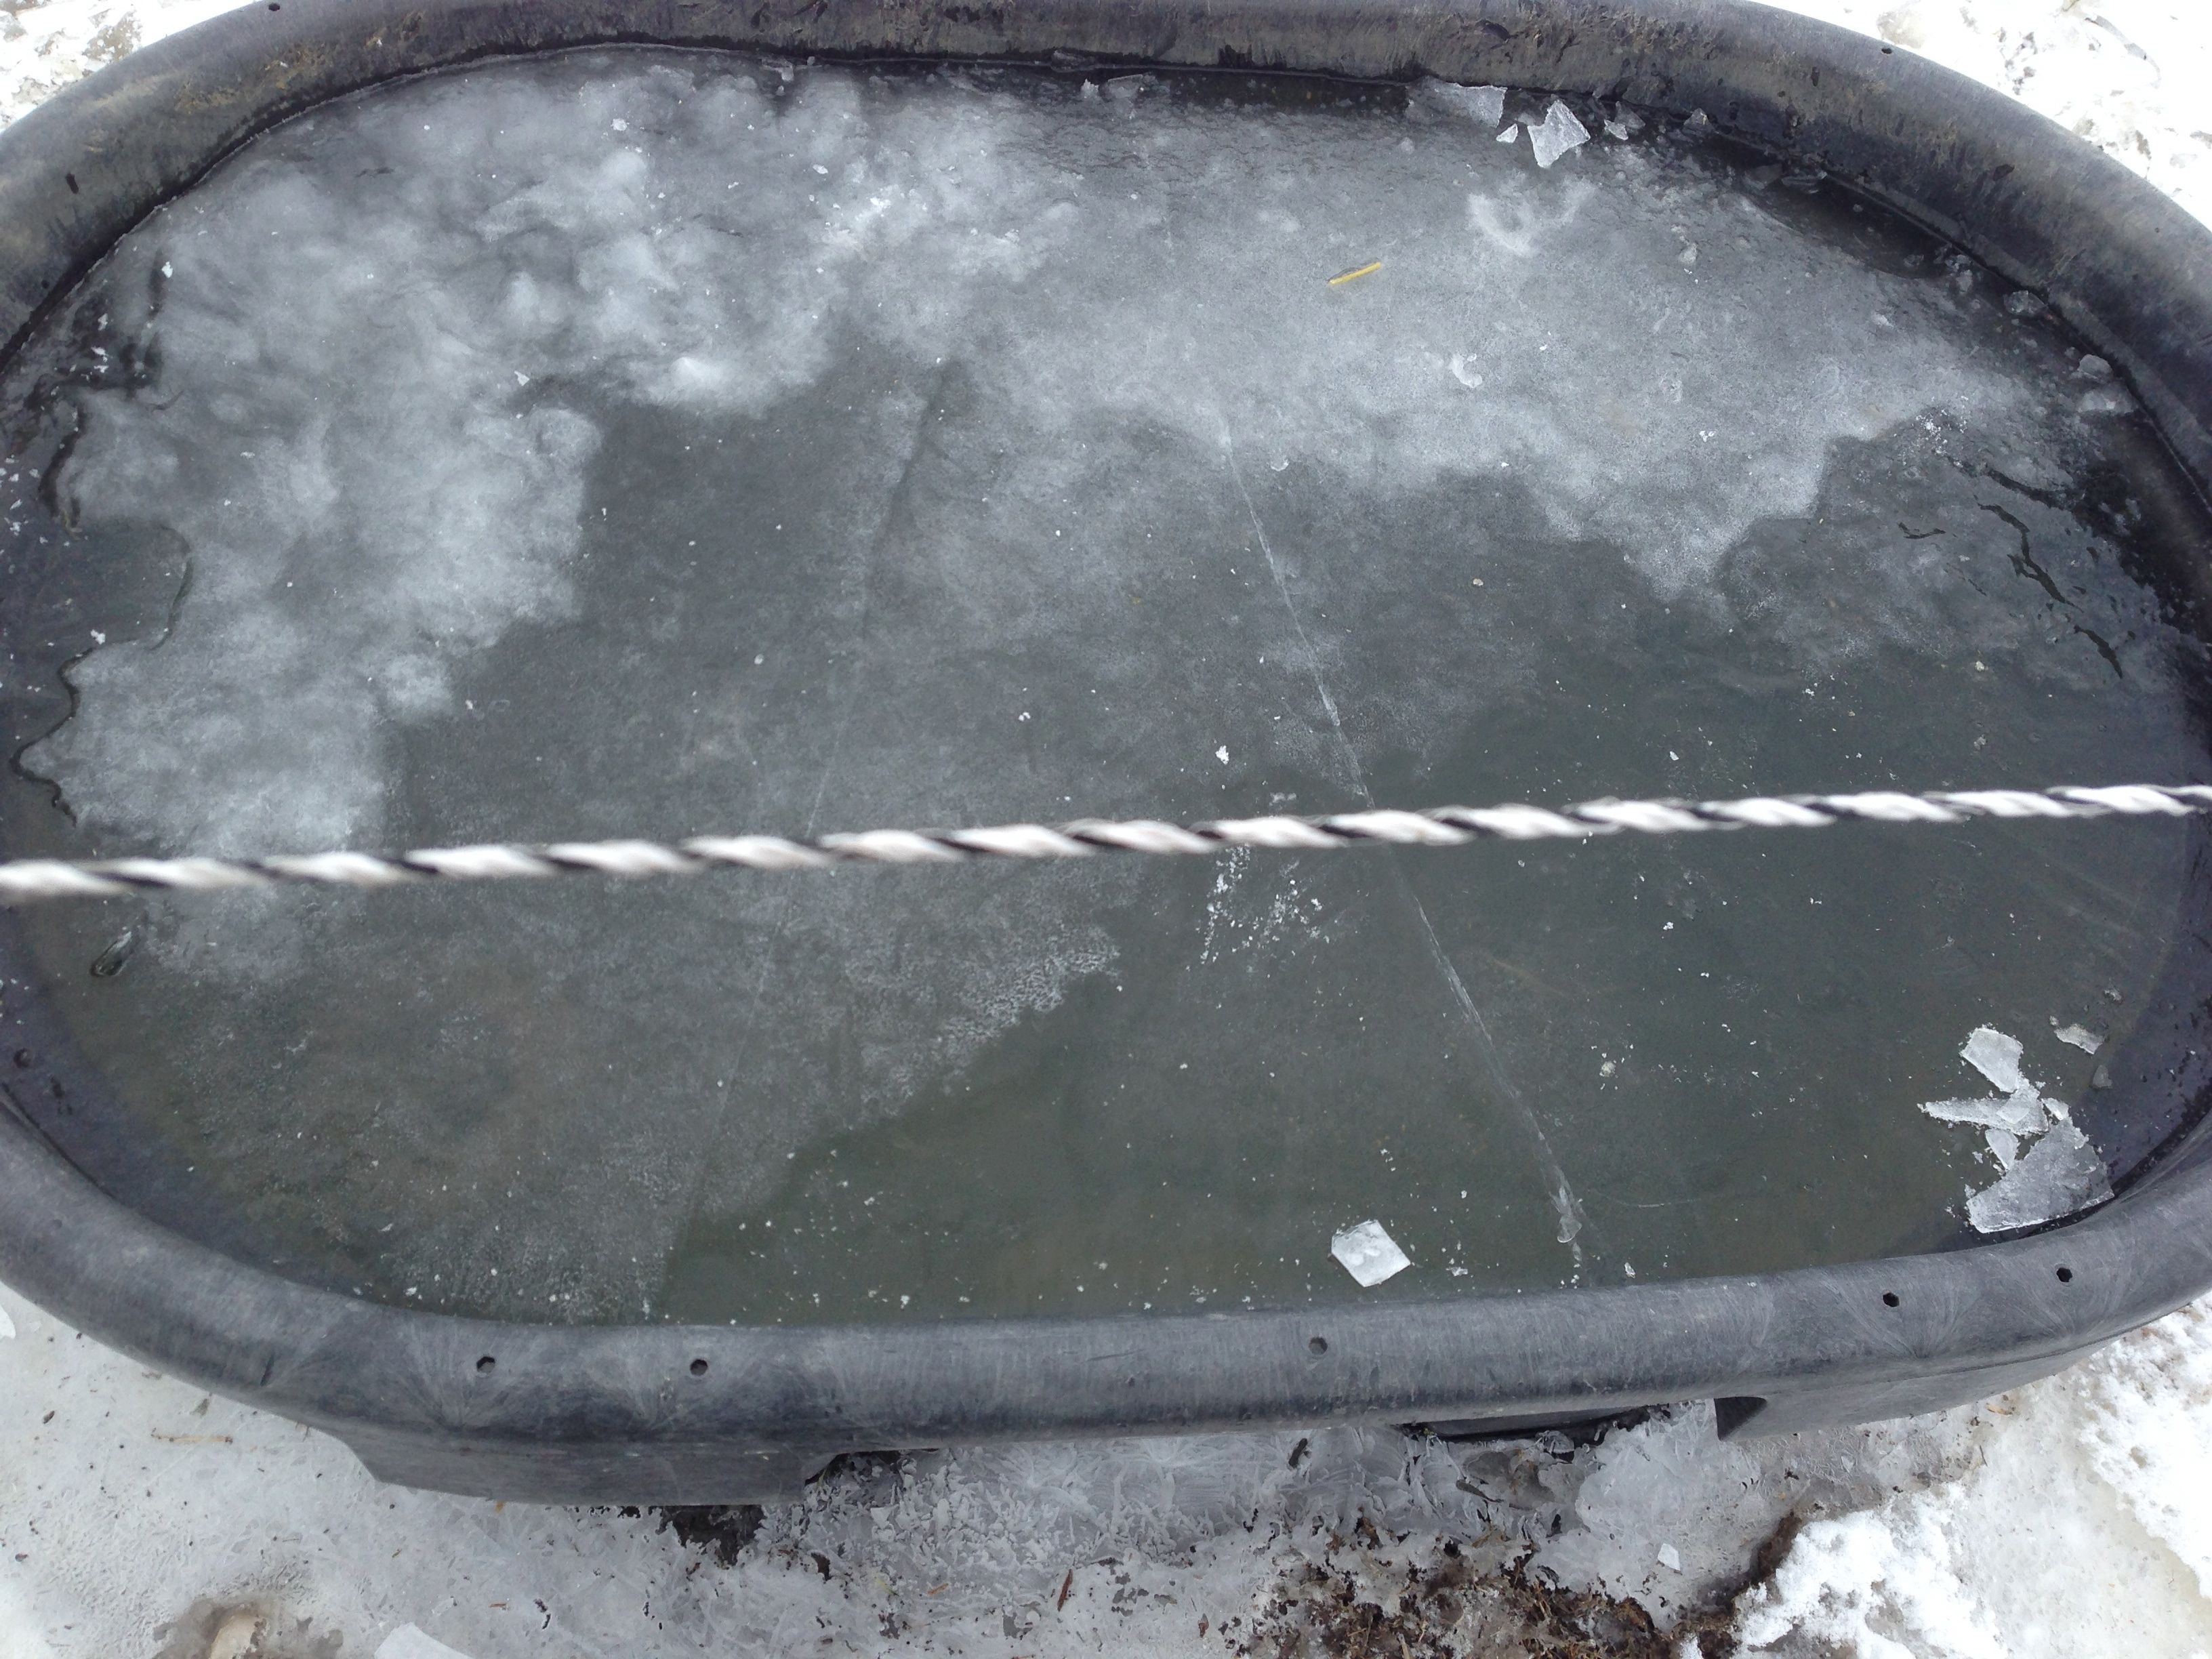 Water trough frozen solid